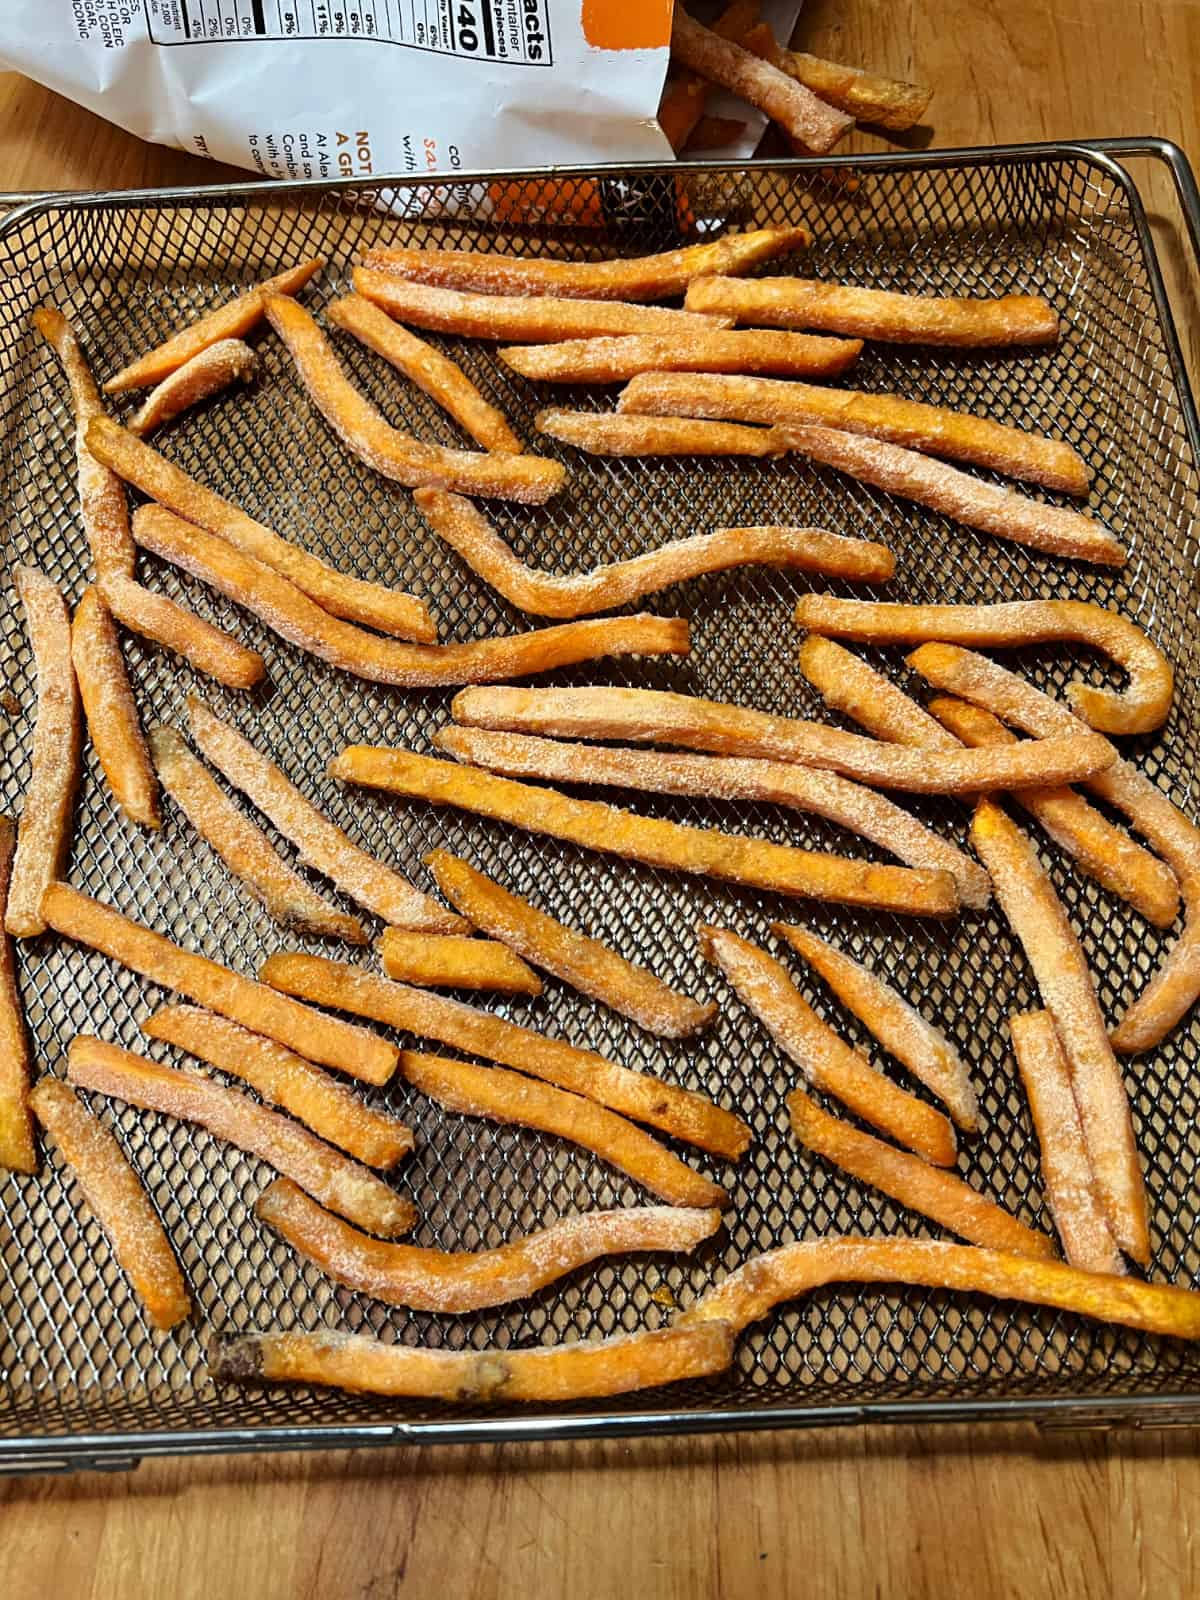 A single layer of frozen sweet potato fries in an air fryer basket.